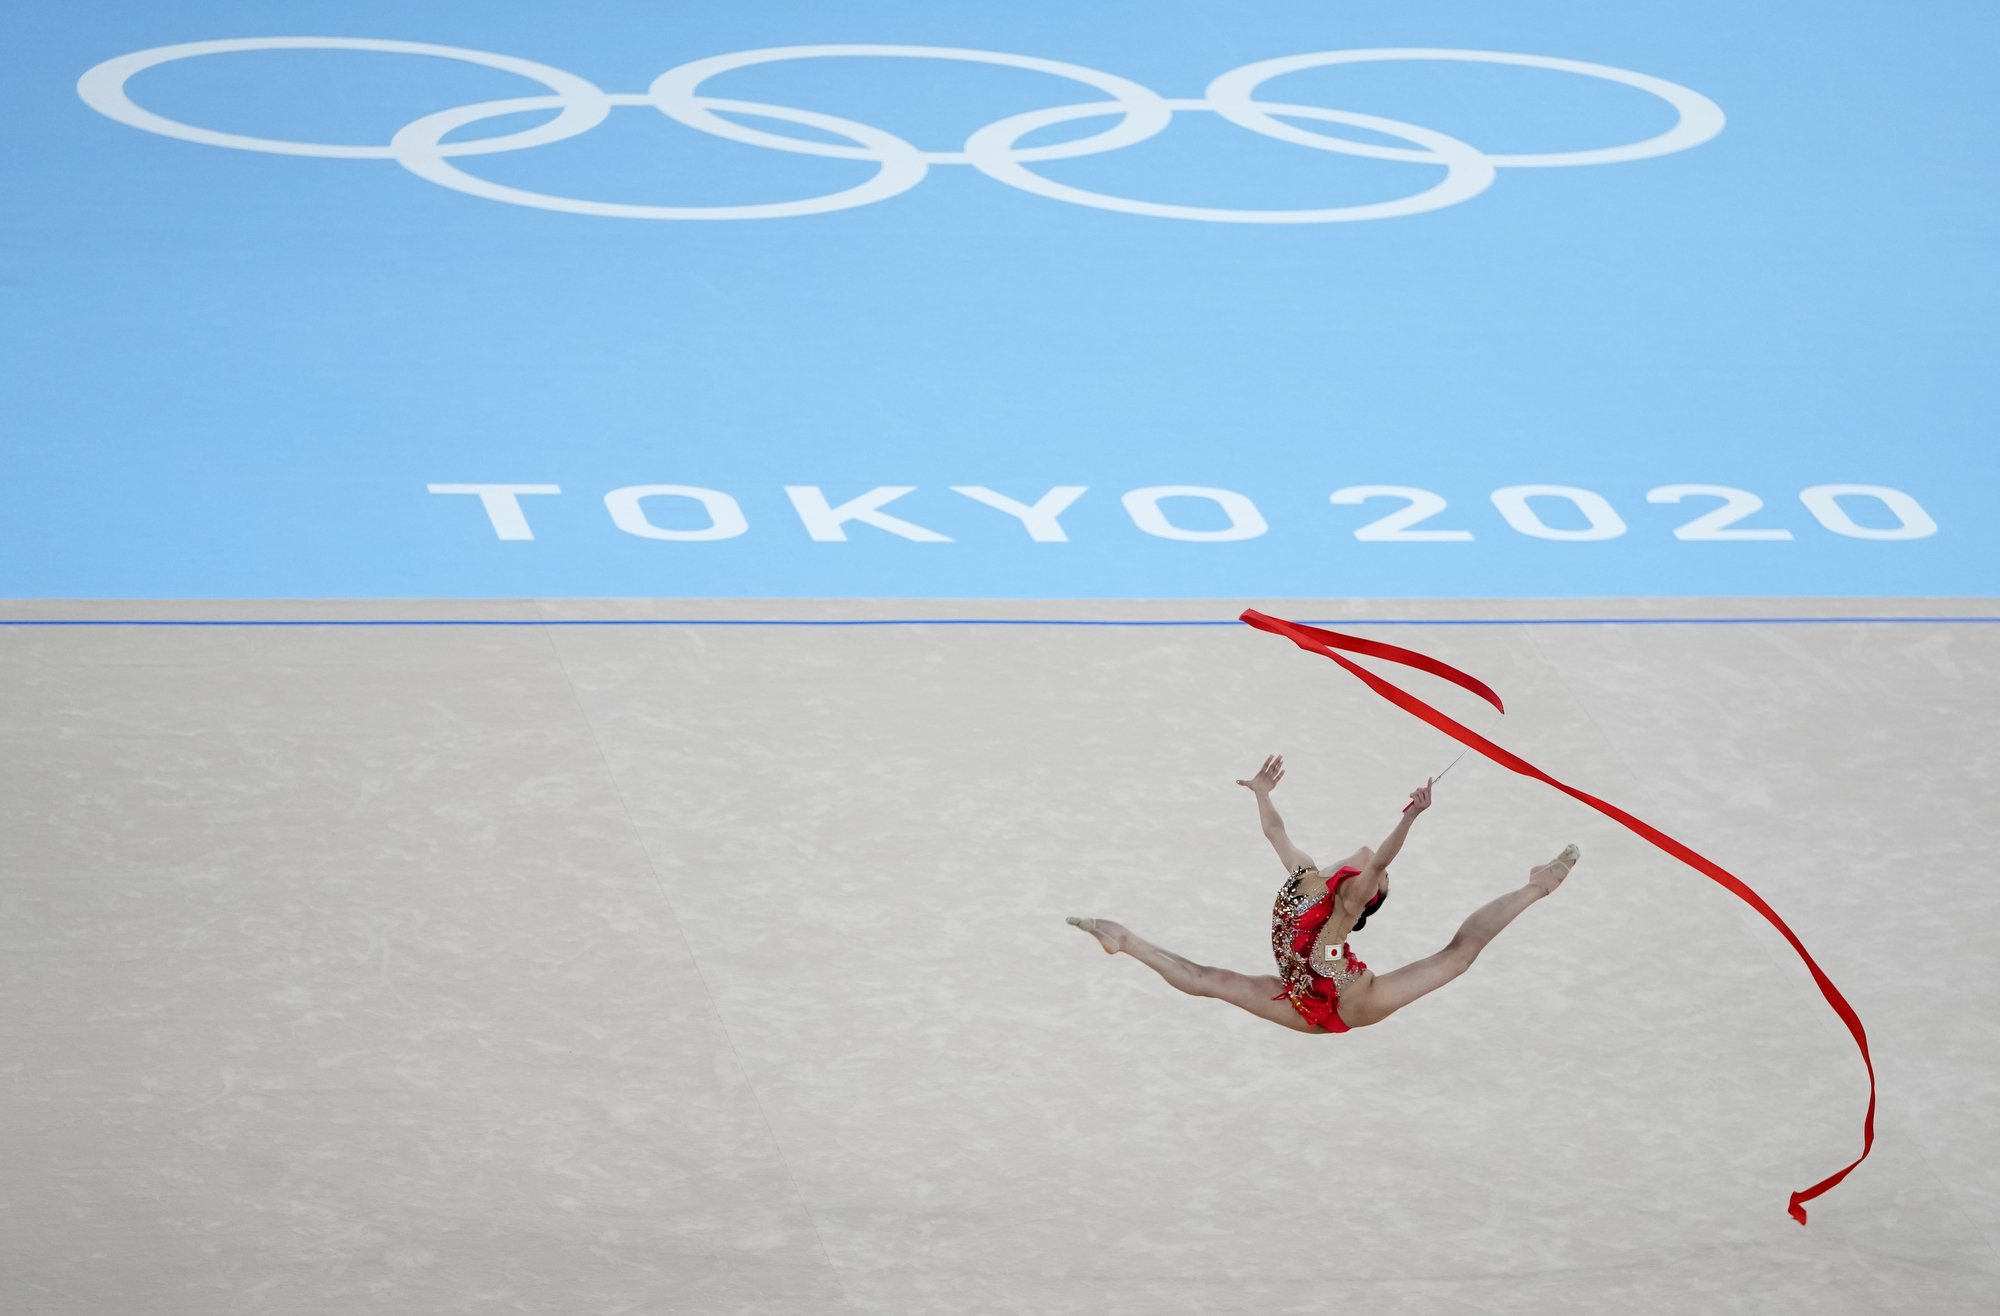  Chisaki Oiwa, of Japan, performs during the rhythmic gymnastics individual all-around qualifier at the 2020 Summer Olympics, Friday, Aug. 6, 2021, in Tokyo, Japan. (AP Photo/Natacha Pisarenko) 